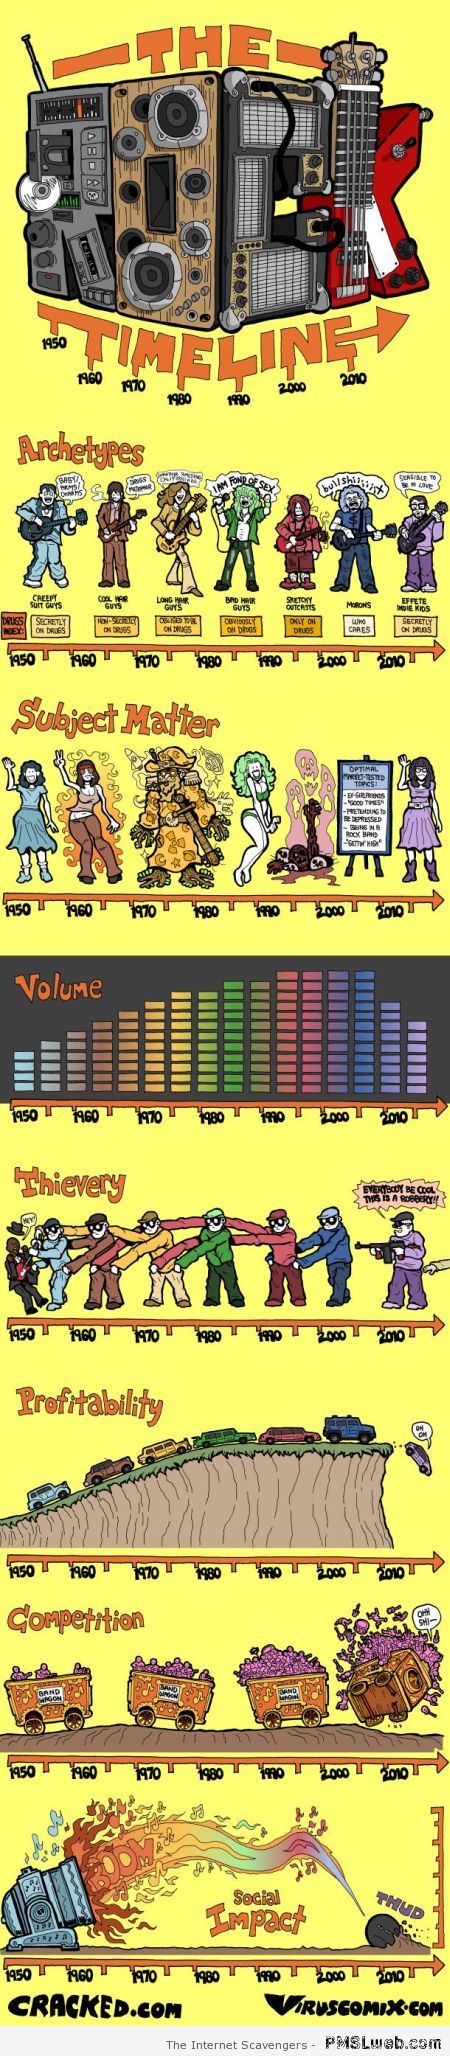 The timeline of rock music at PMSLweb.com